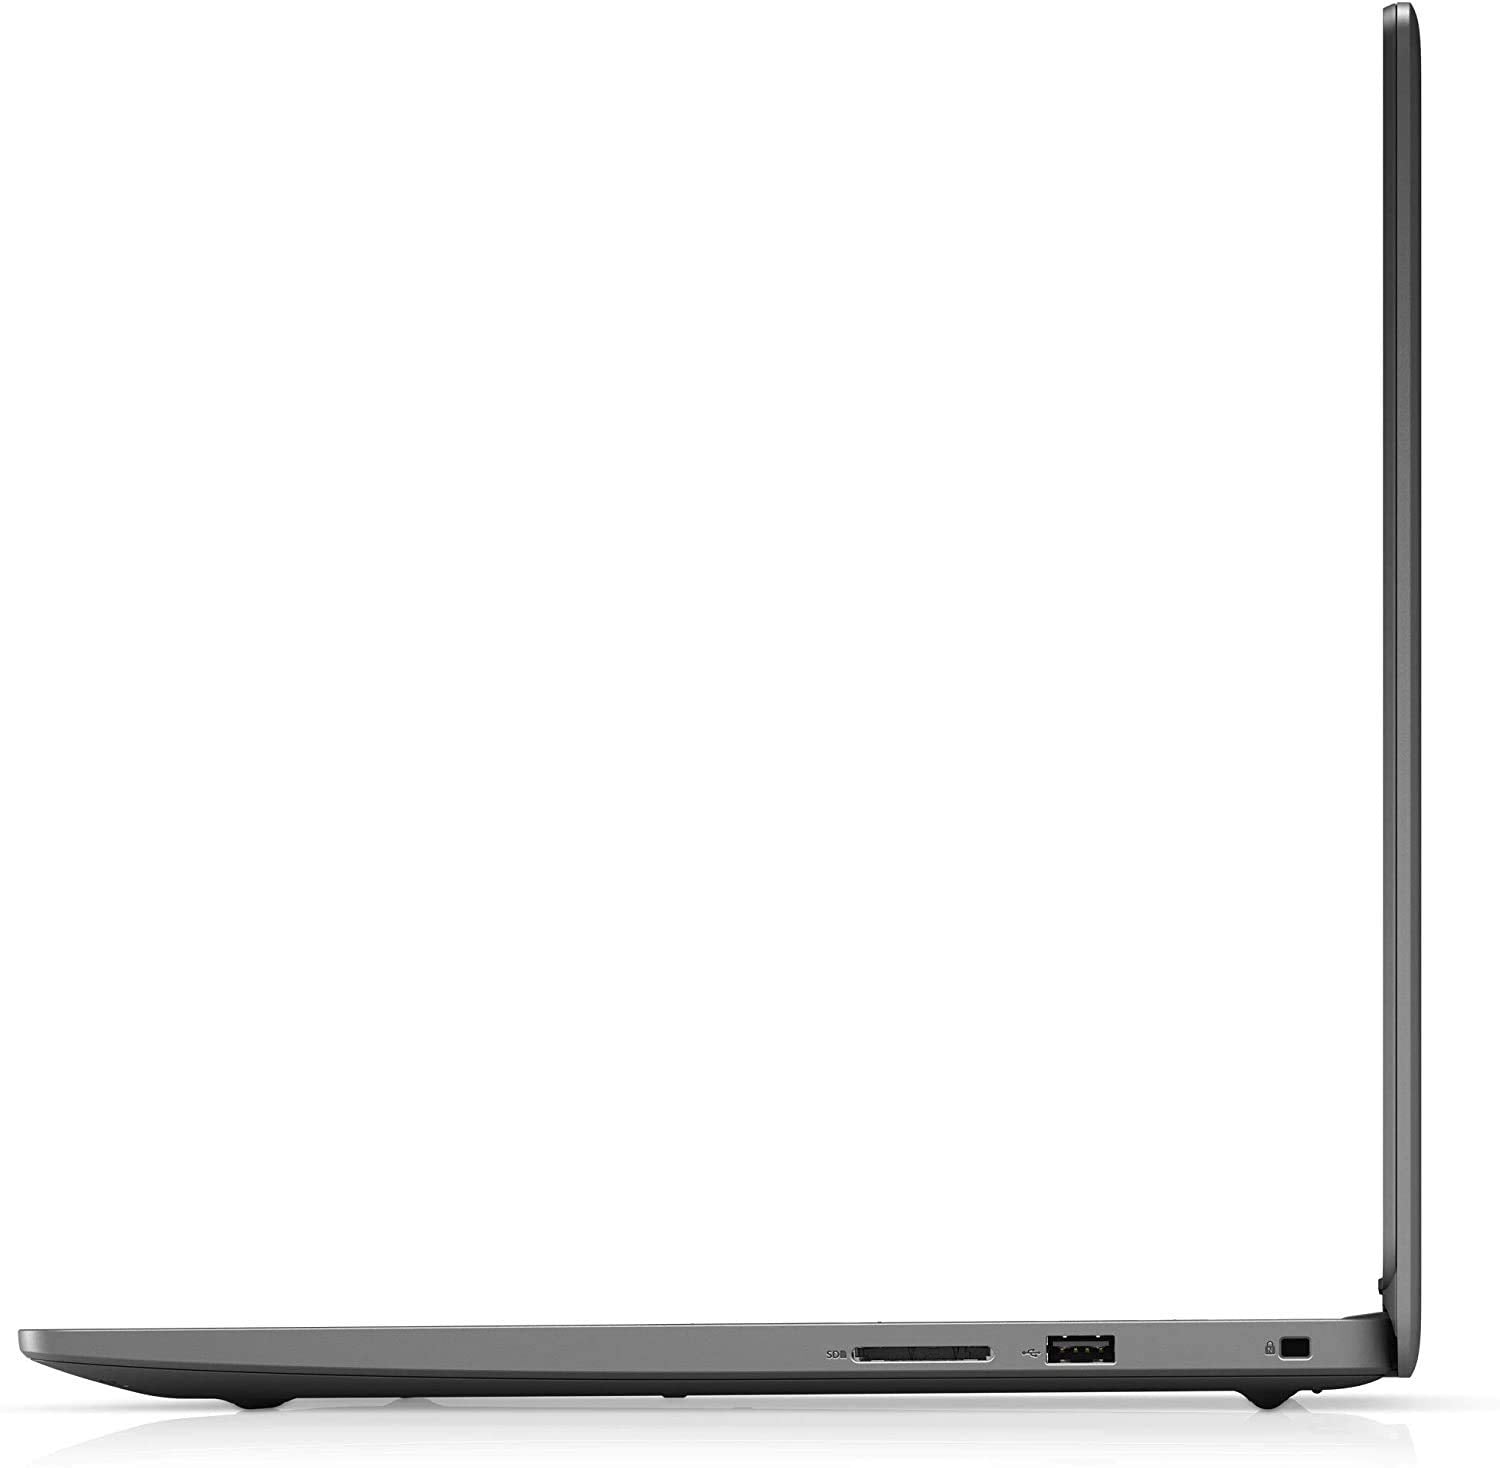 Dell Laptop Inspiron 3501, Core i5, 1TB HDD, 256GB SSD, 11th Gen